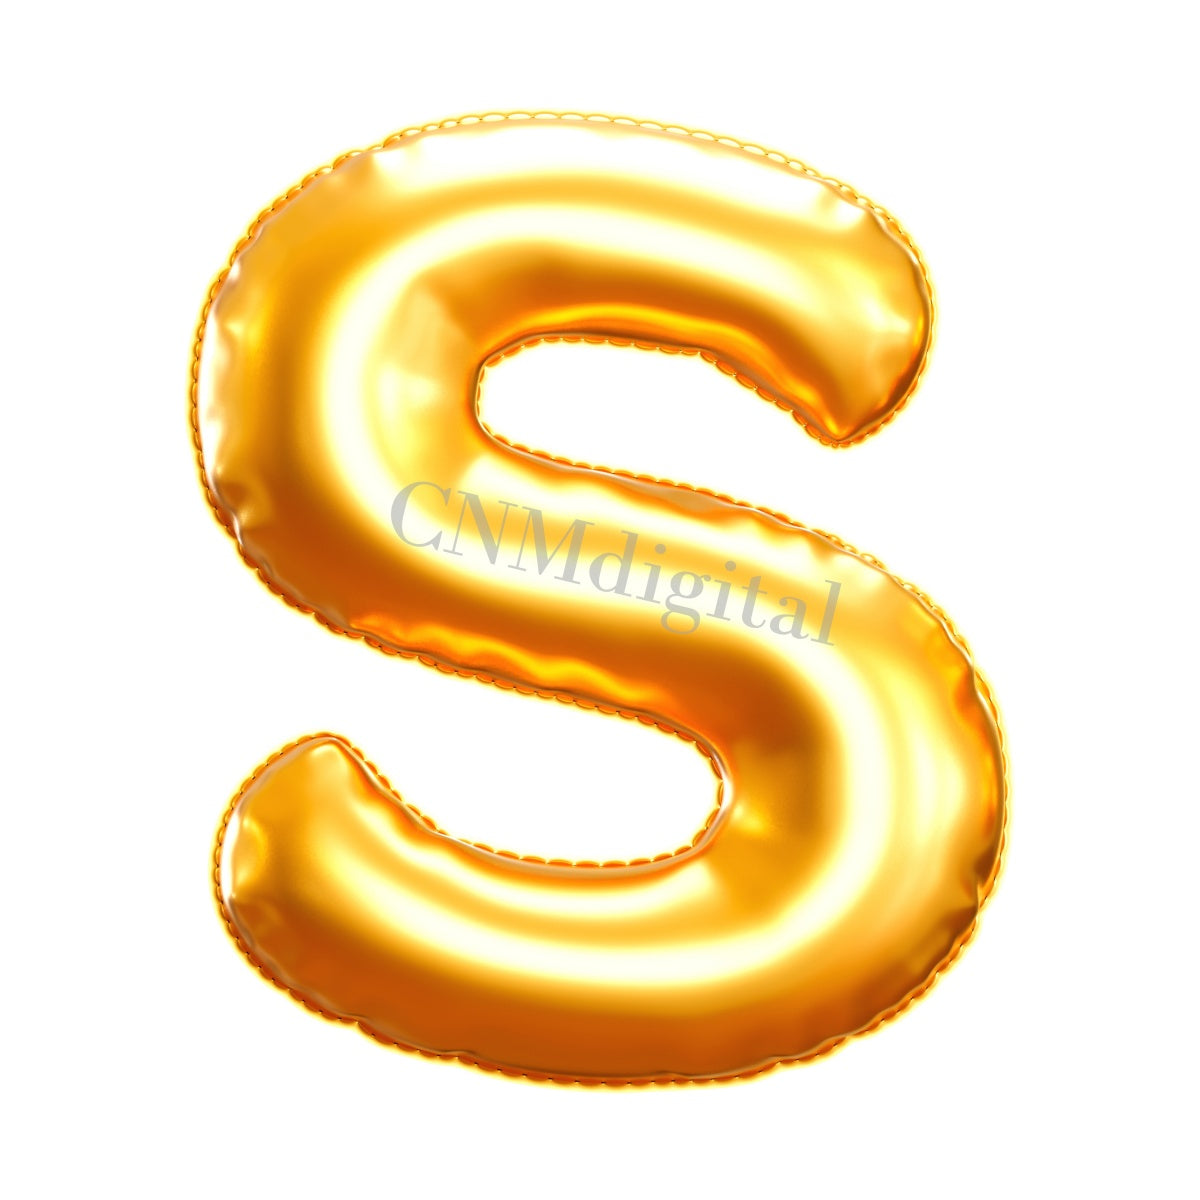 Gold foil balloons letters, English alphabet, Instant Download, Digital file, clipart, Transparent, S-letter, PNG graphics, clipart letters,